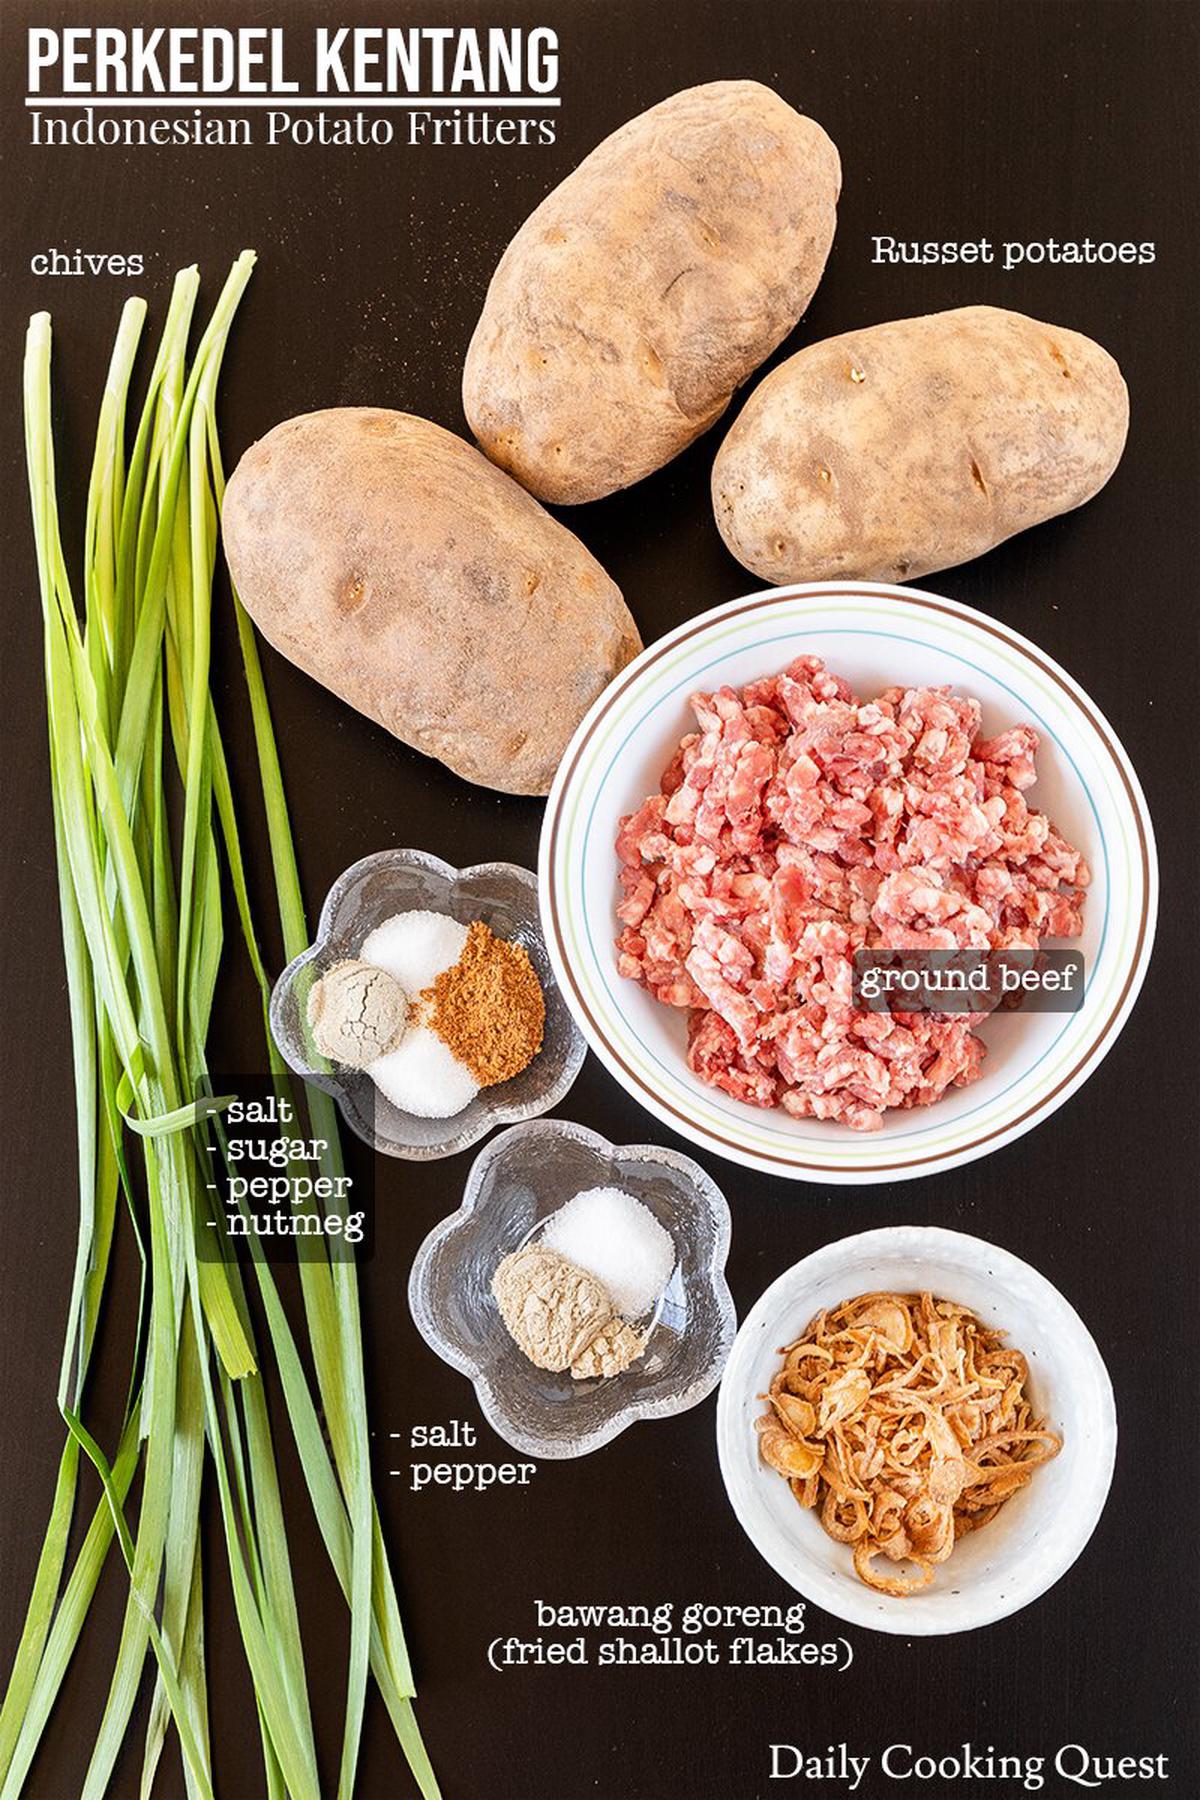 Ingredients to prepare perkedel kentang (Indonesian potato fritters).